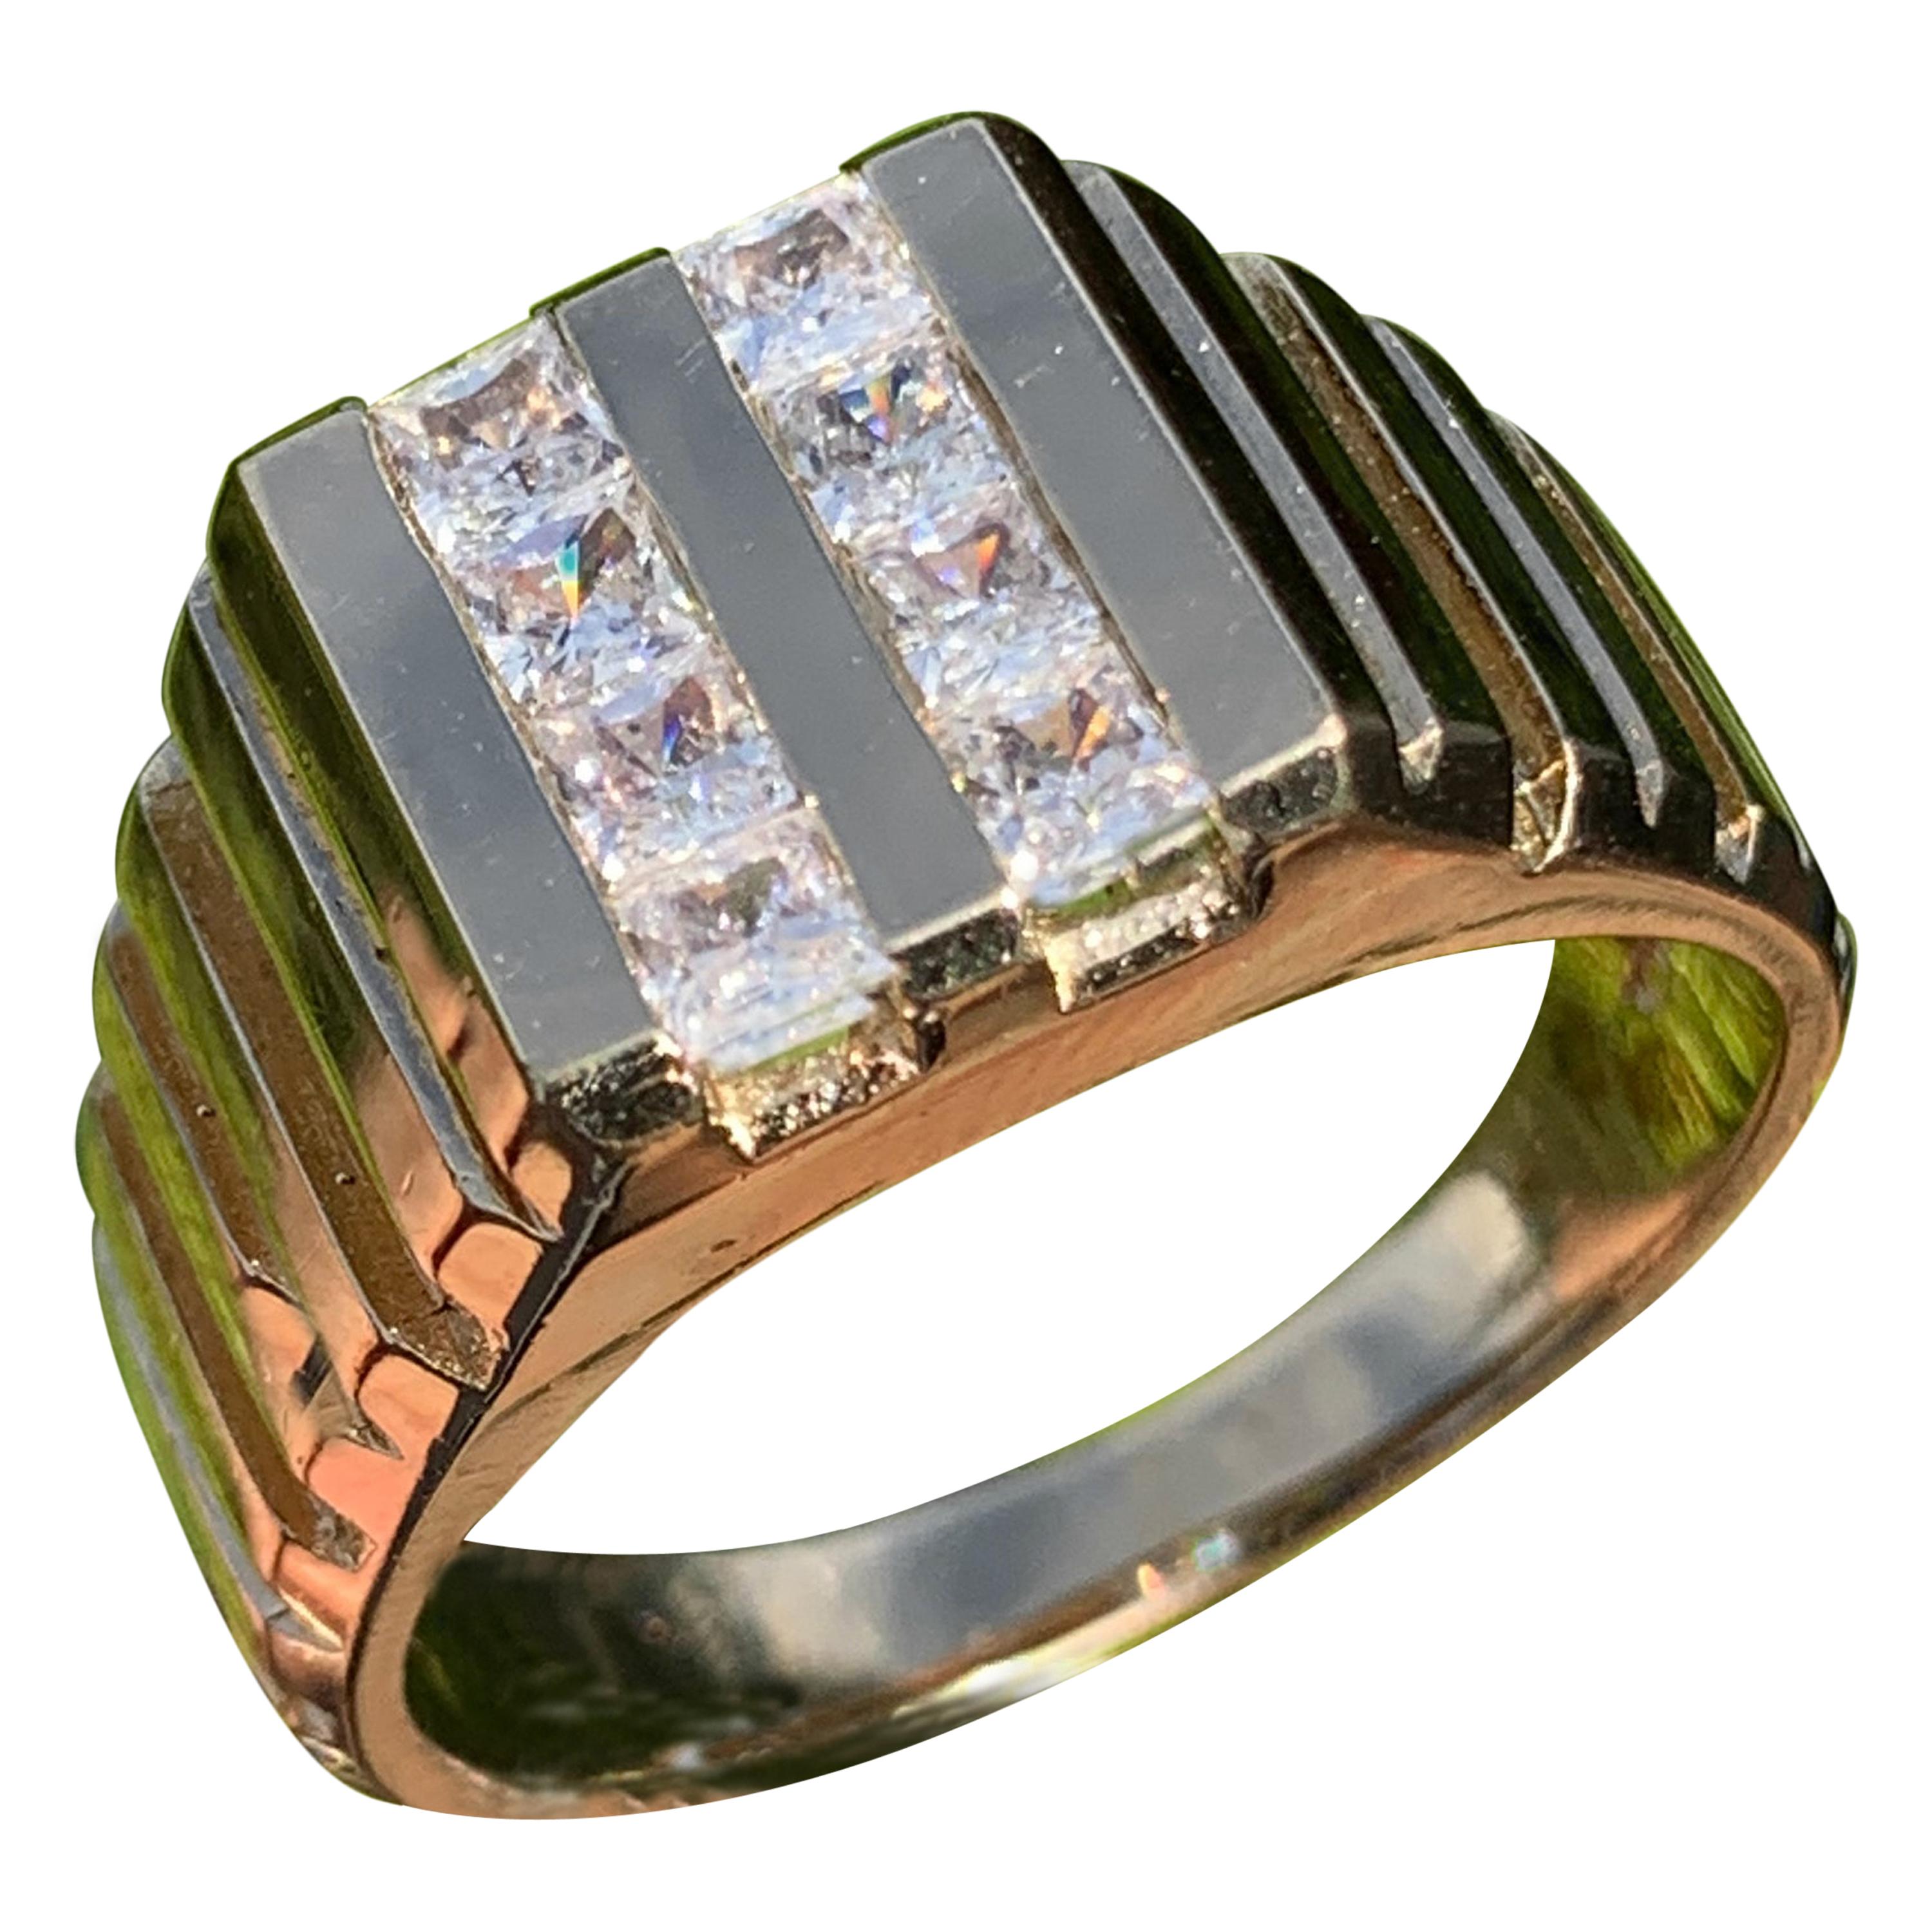 1.00 Carat Diamond Ring/Band, 10 Karat, 1980s Ben Dannie Original Design For Sale